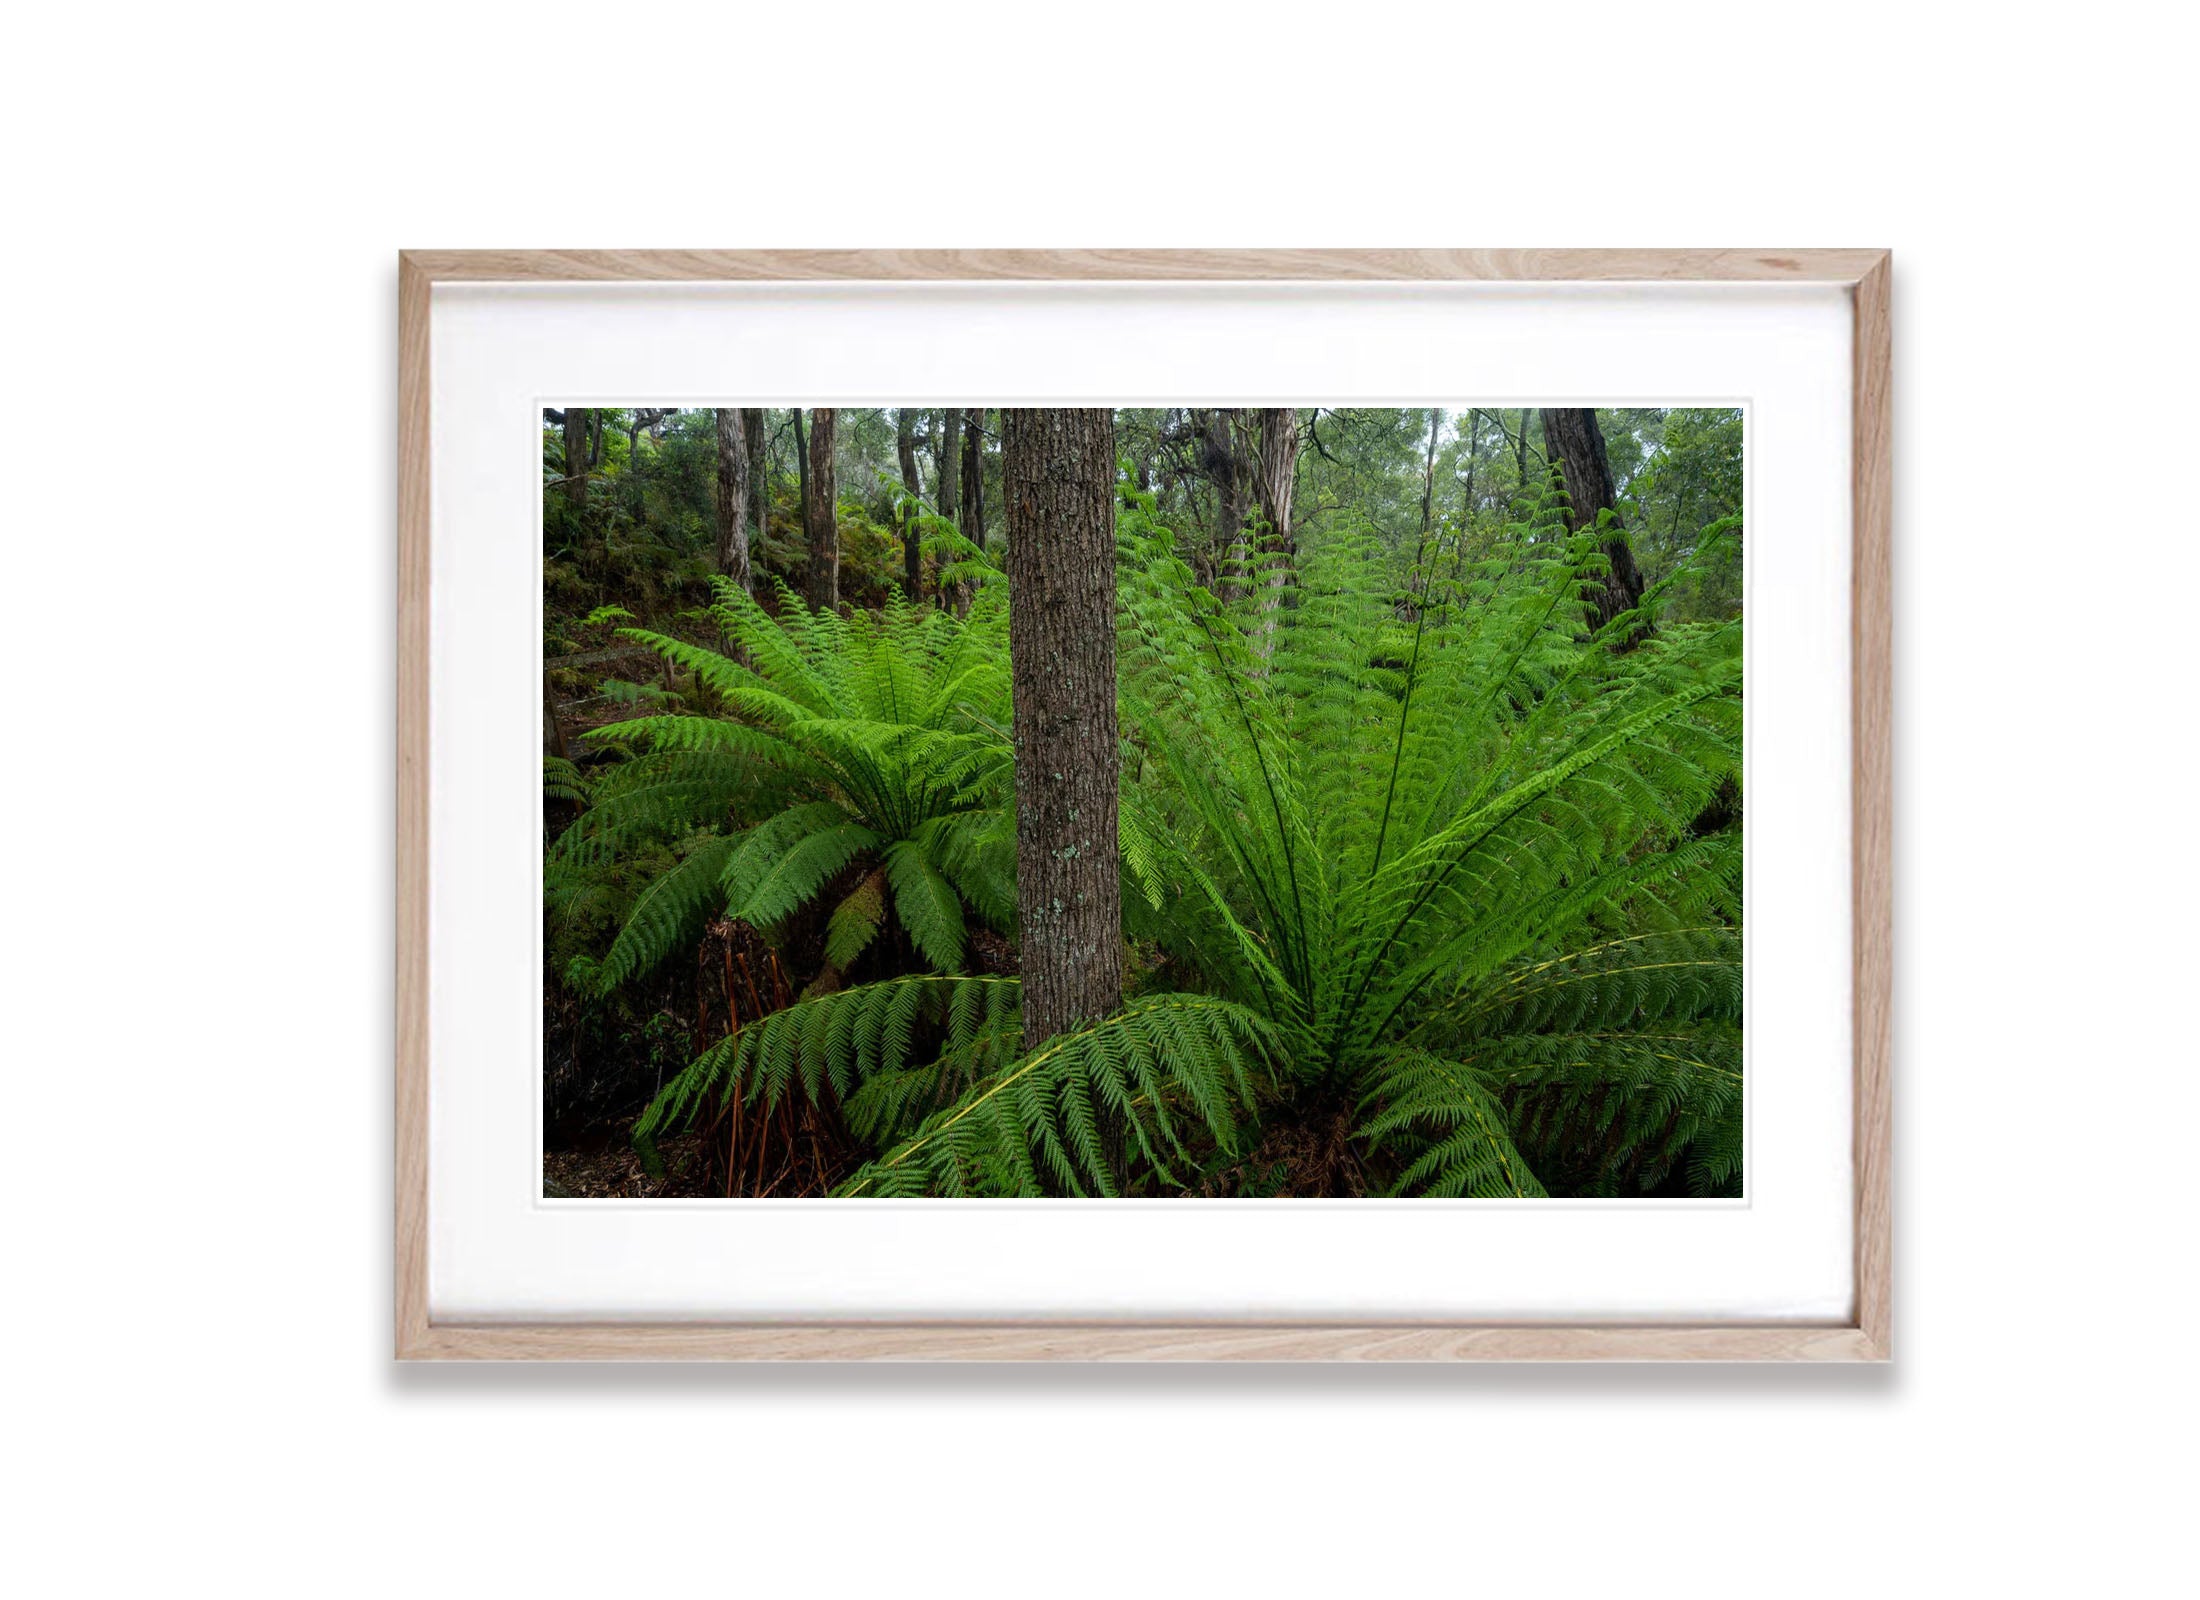 Giant Ferns, Green's Bush, Mornington Peninsula